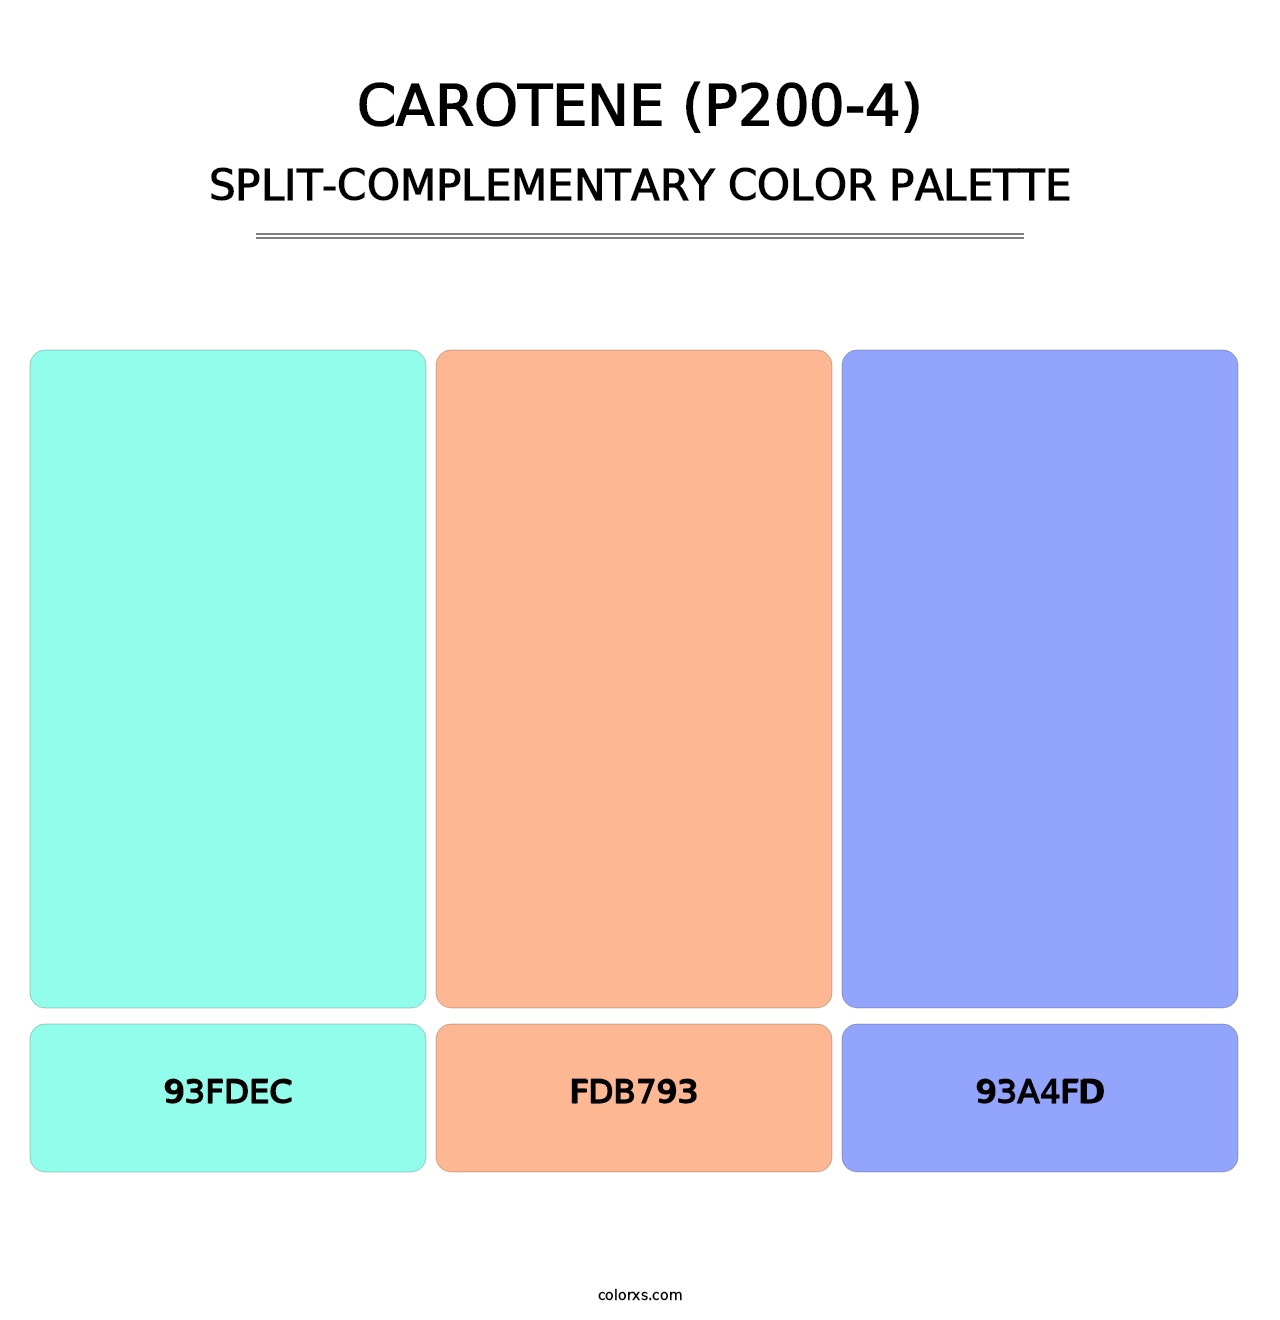 Carotene (P200-4) - Split-Complementary Color Palette